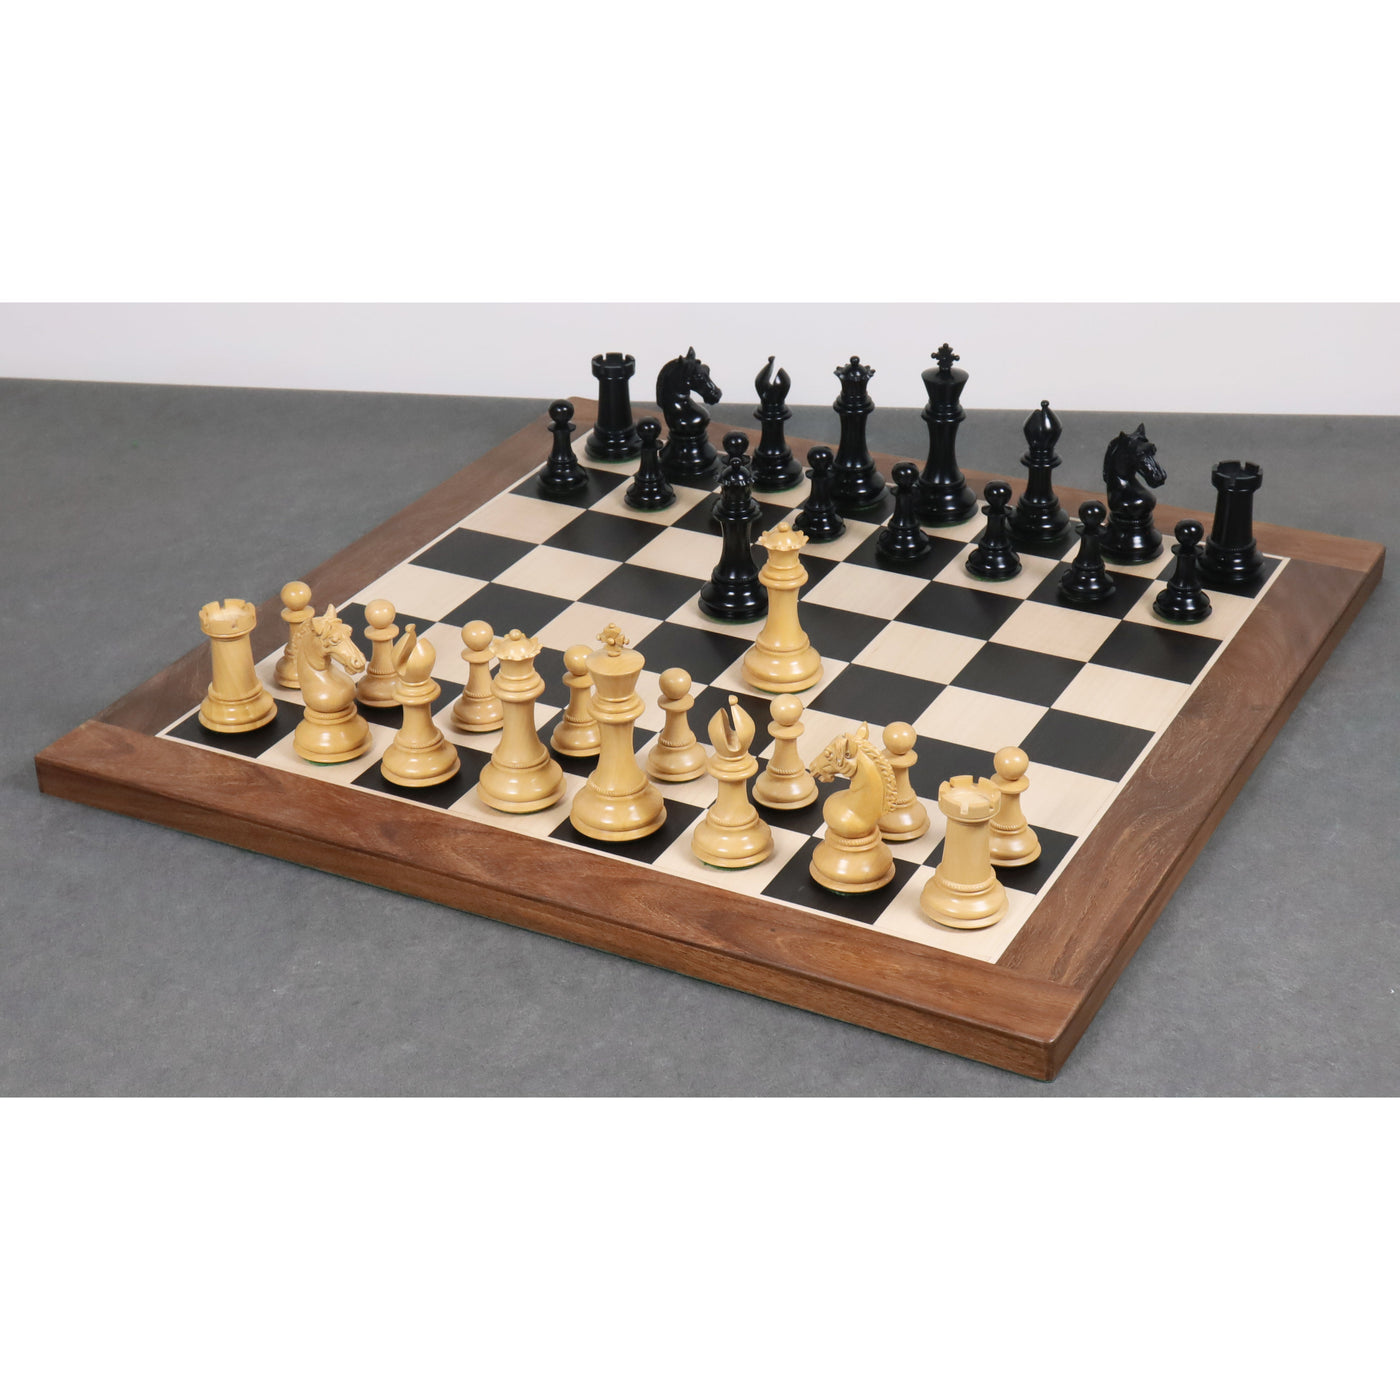 4.5" Sheffield Staunton Luxury Chess Ebony Wood Pieces with 23" Ebony & Maple Wood Chessboard - Sheesham borders and Leatherette Coffer Storage Box